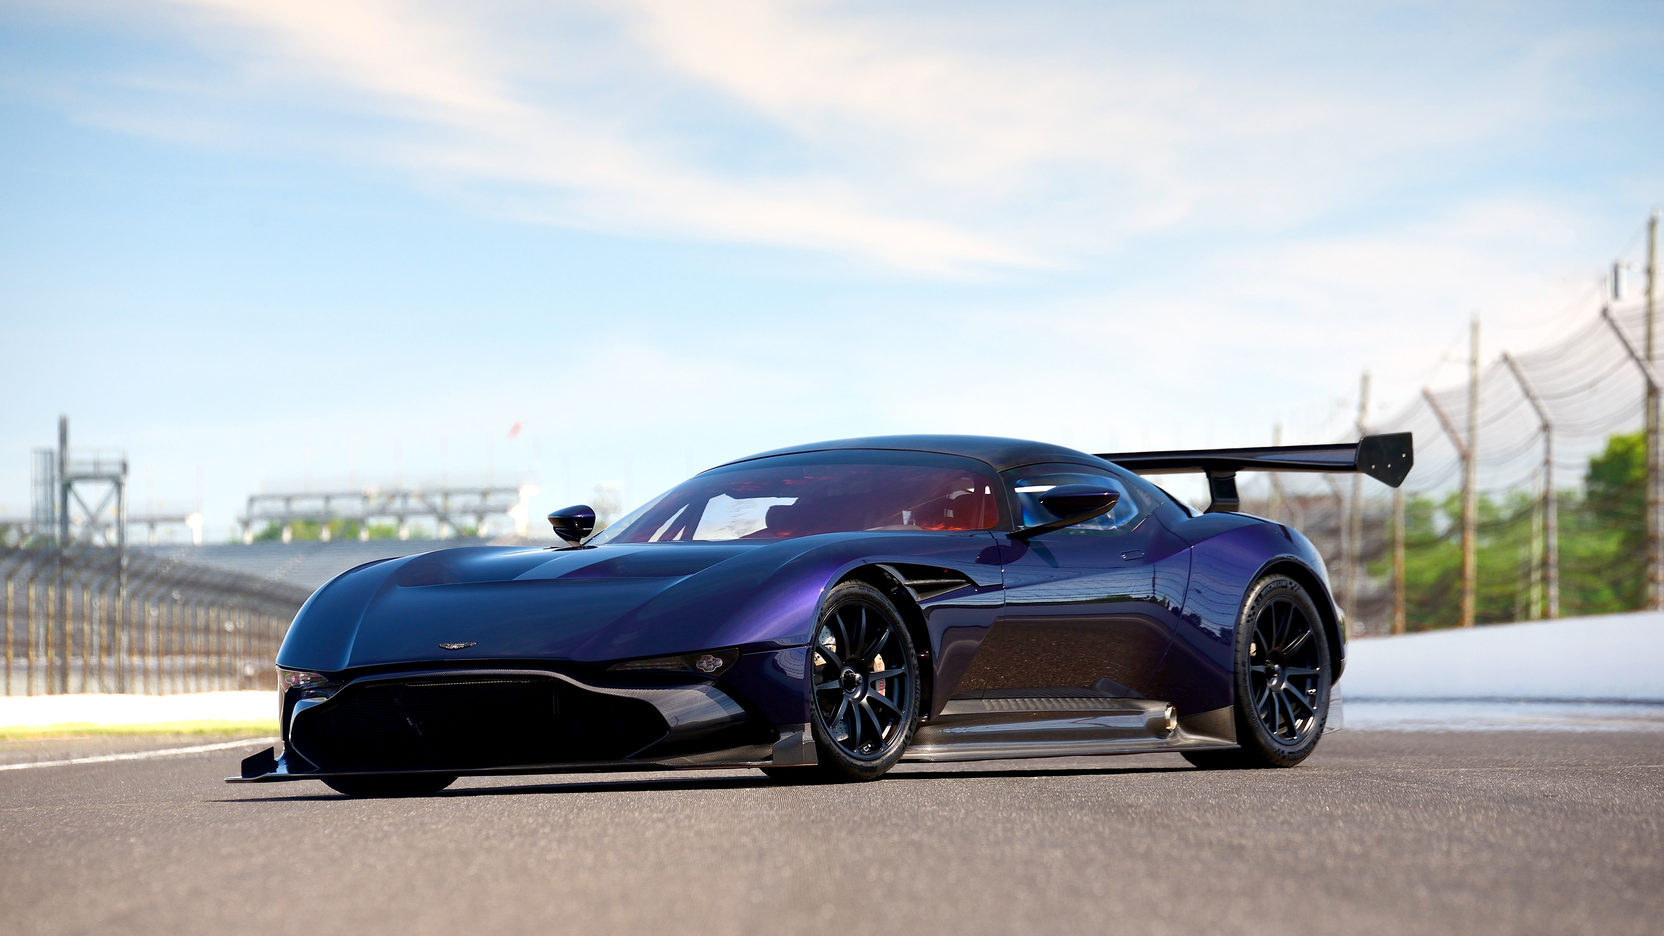 Unstoppable Power: The 2016 Aston Martin Vulcan